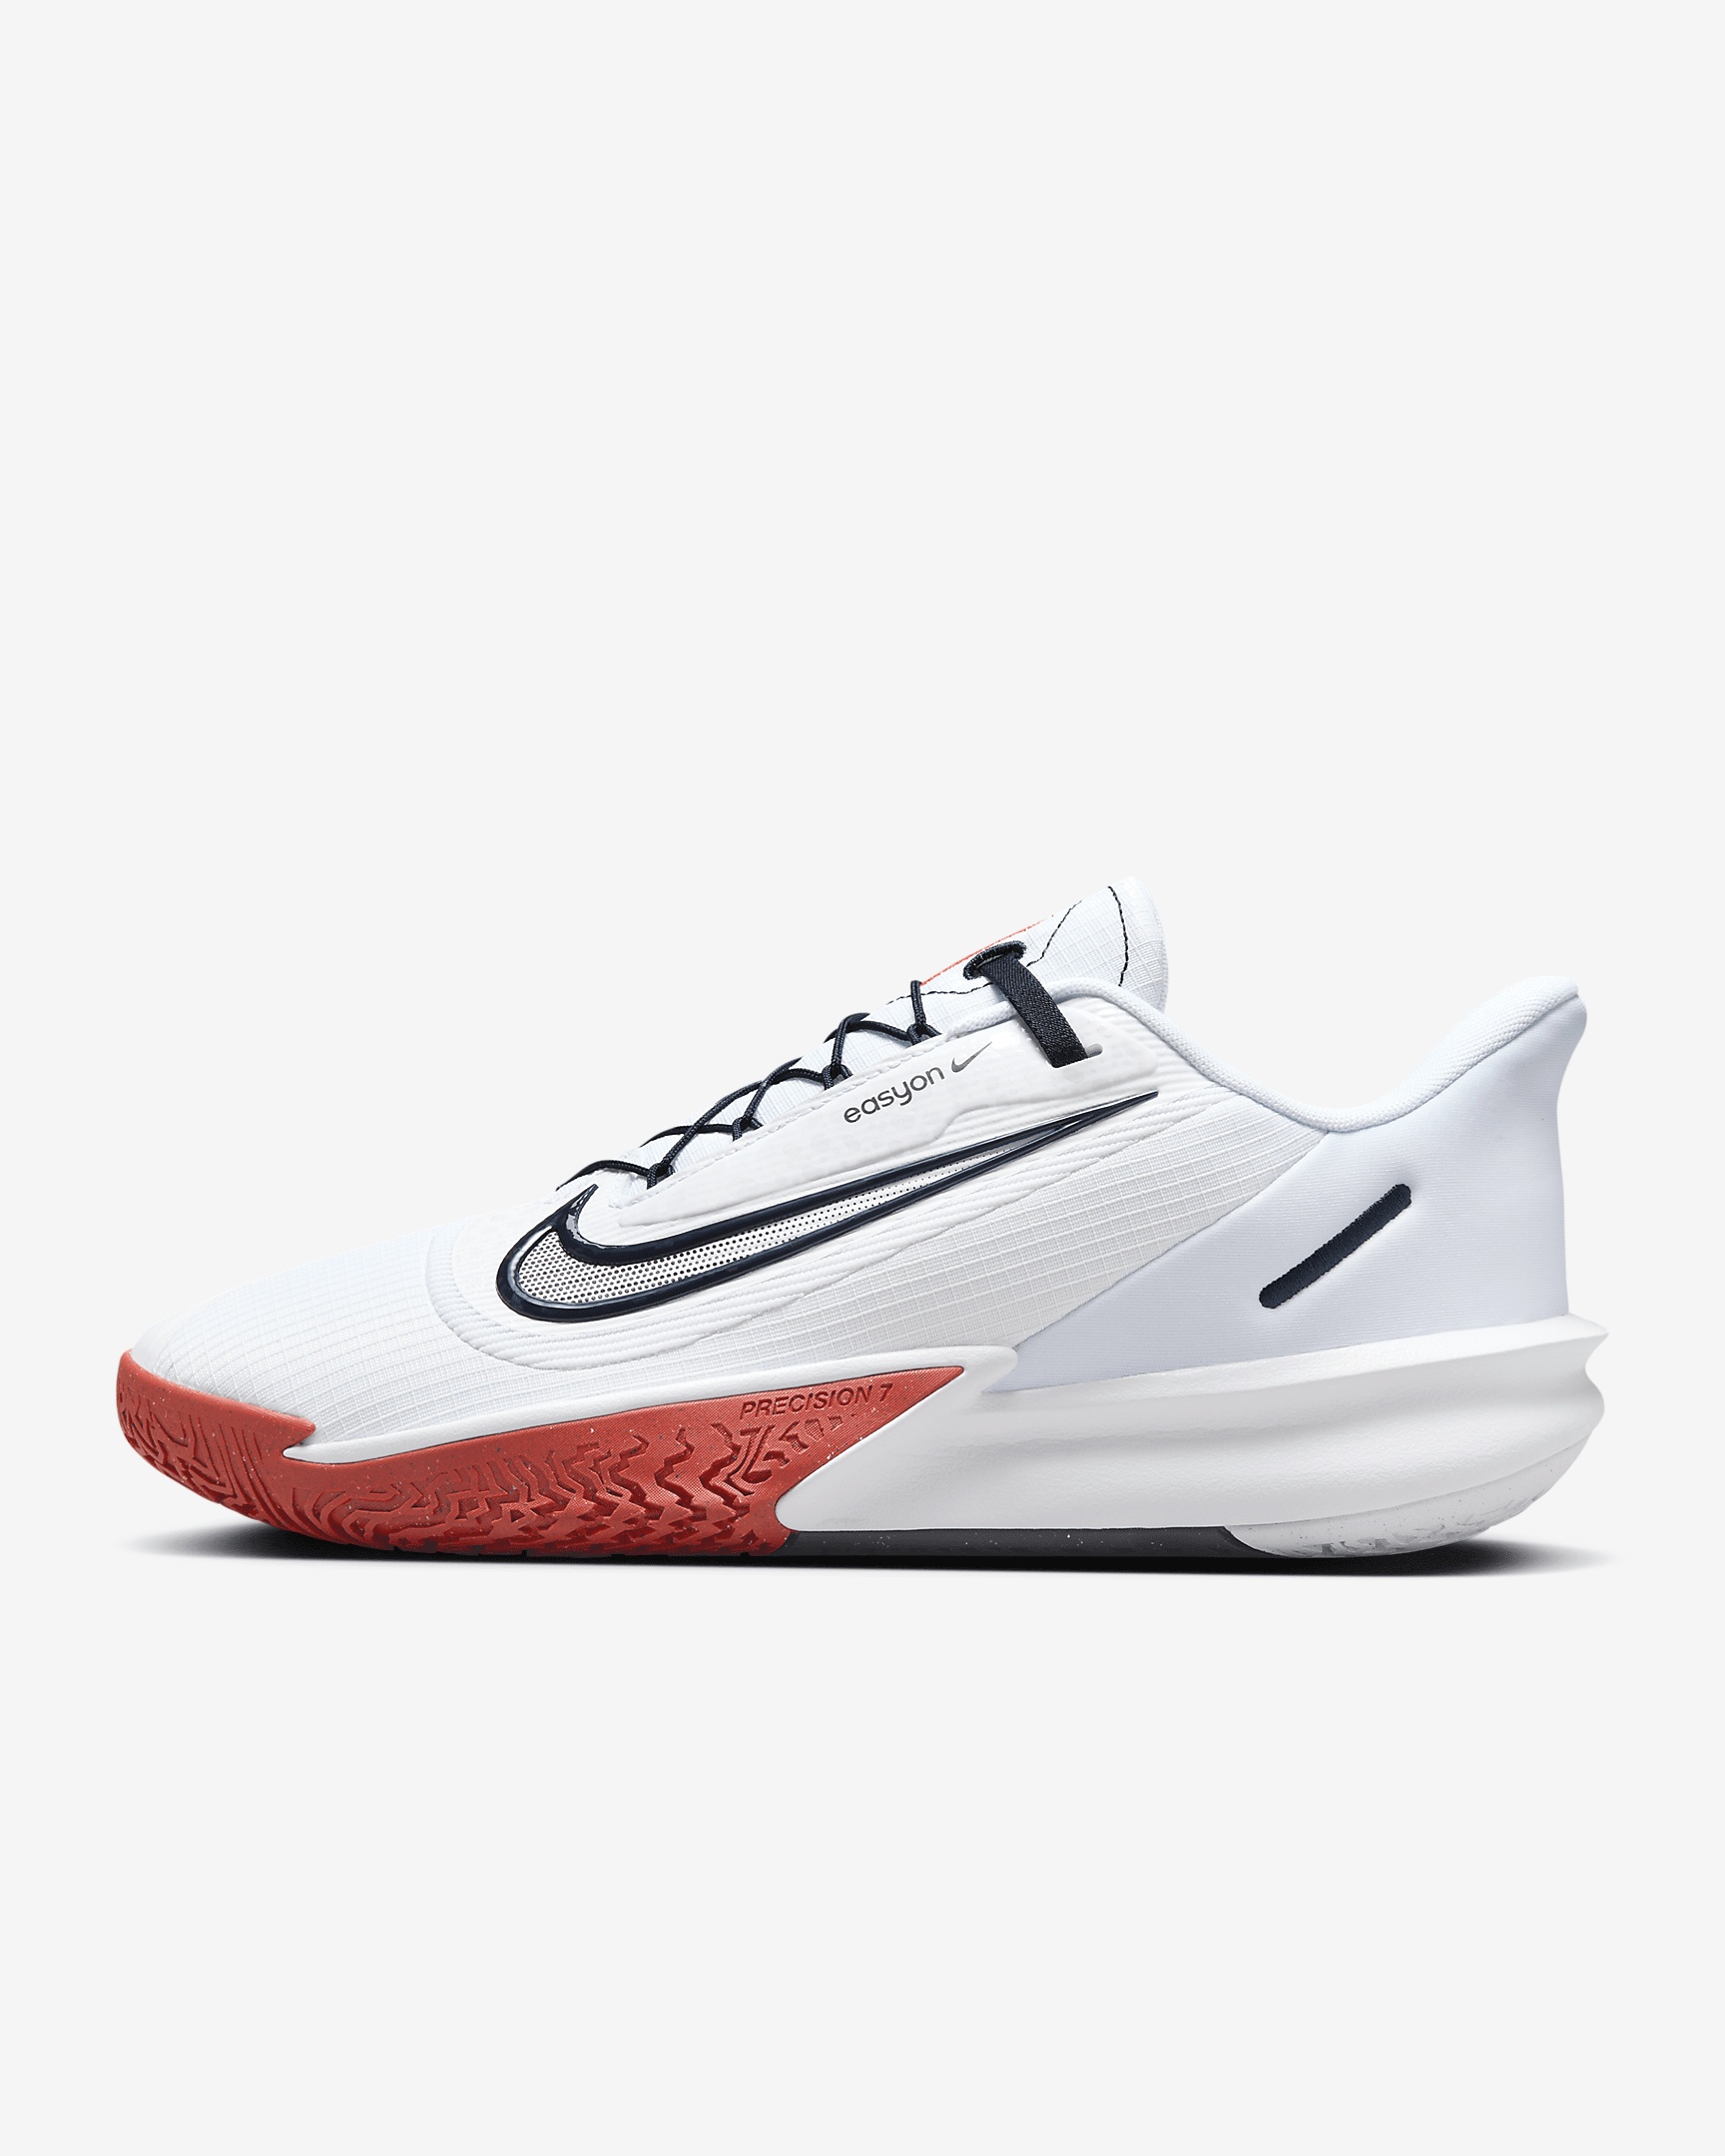 Nike Precision 7 EasyOn Men's Basketball Shoes - 1